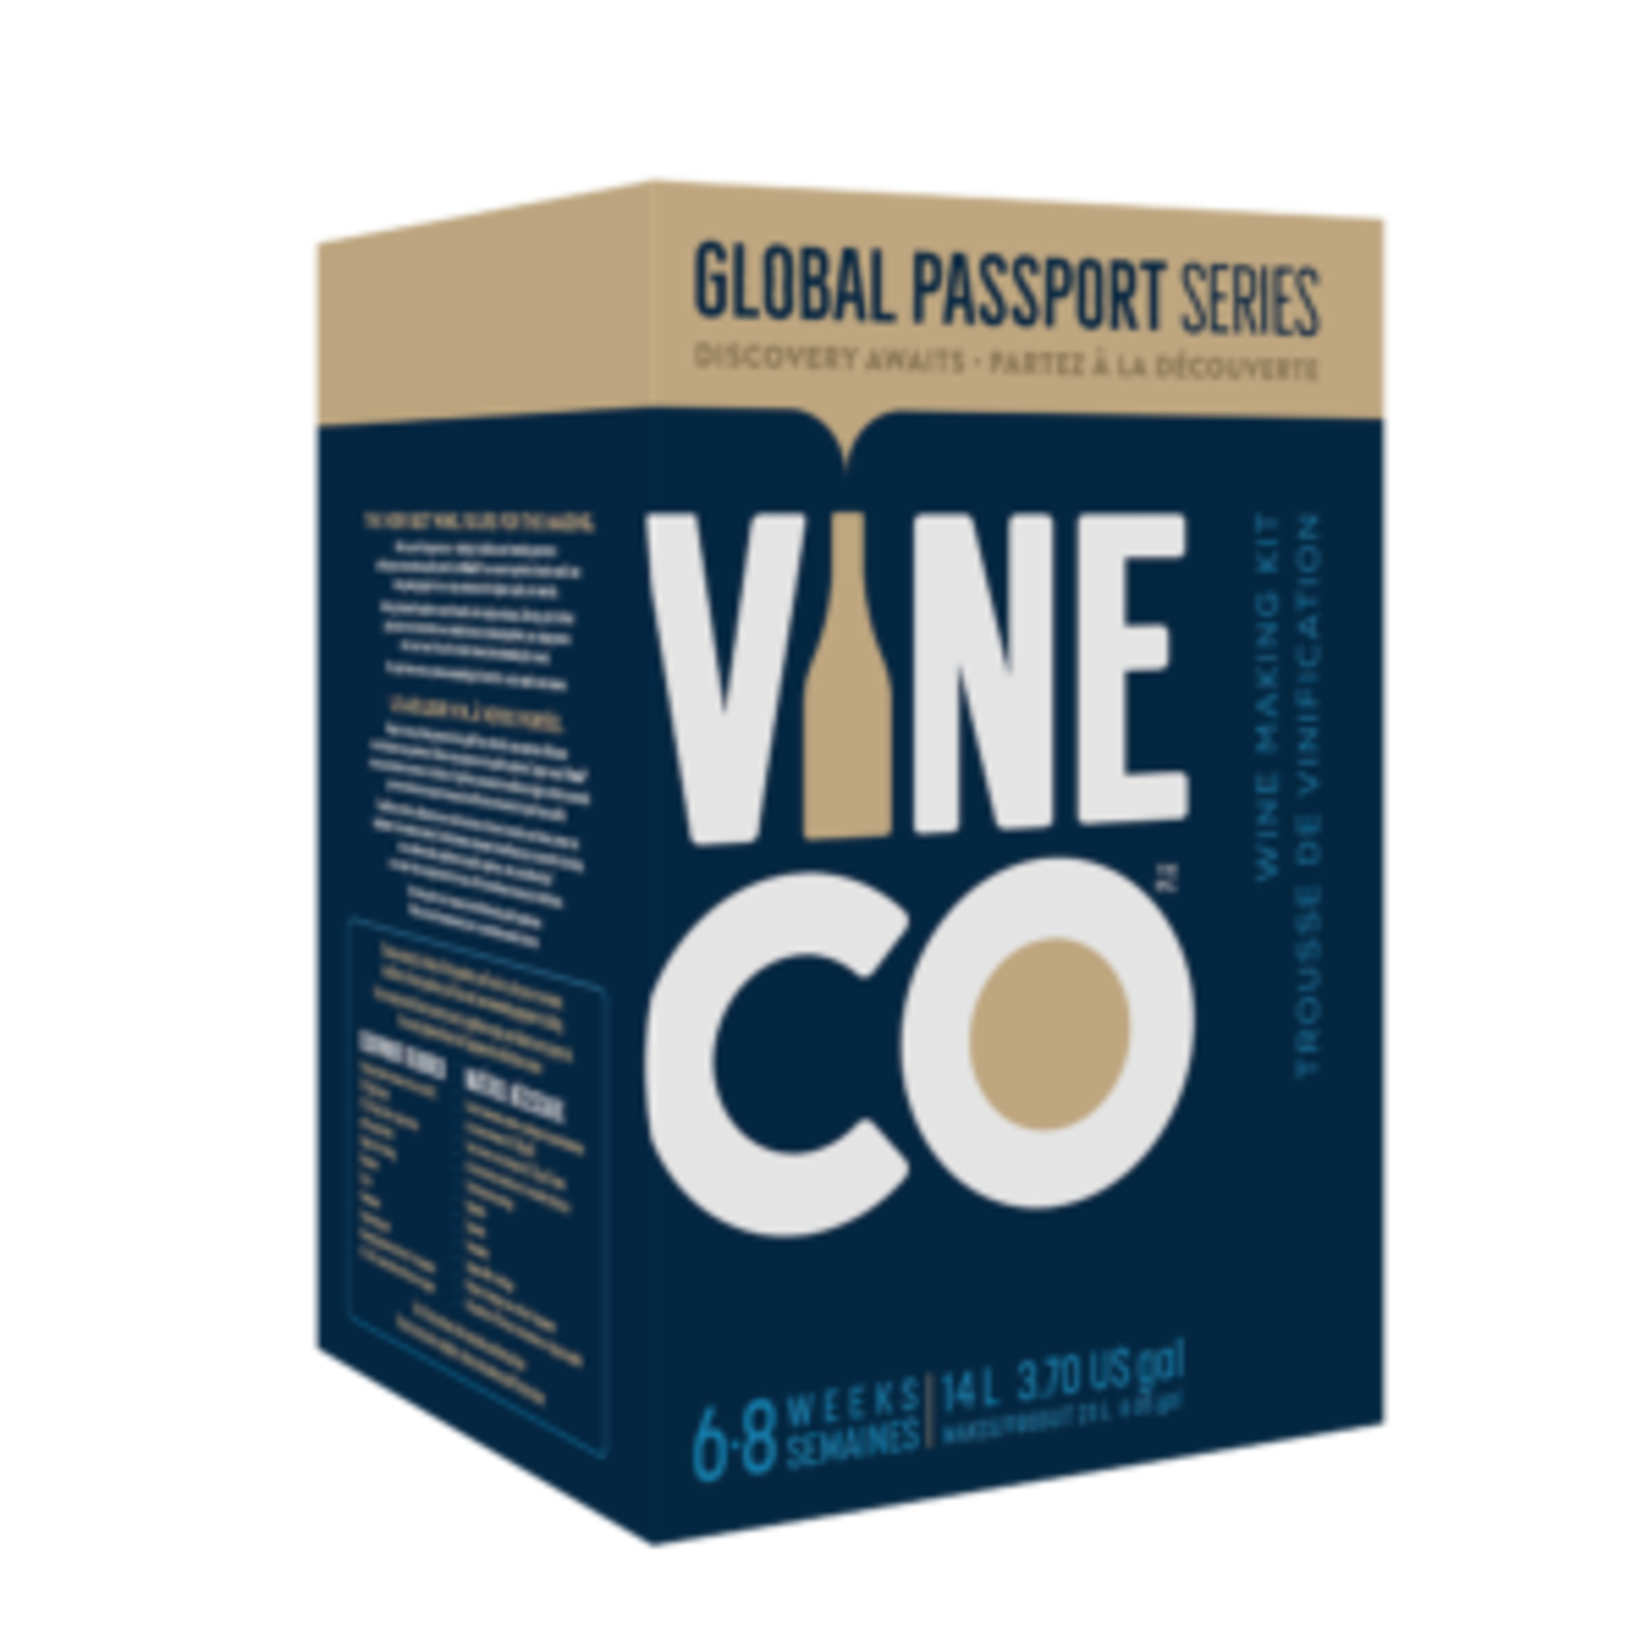 Vine Co. Global Passport Series, Cabernet Shiraz Montepulciano, AUS